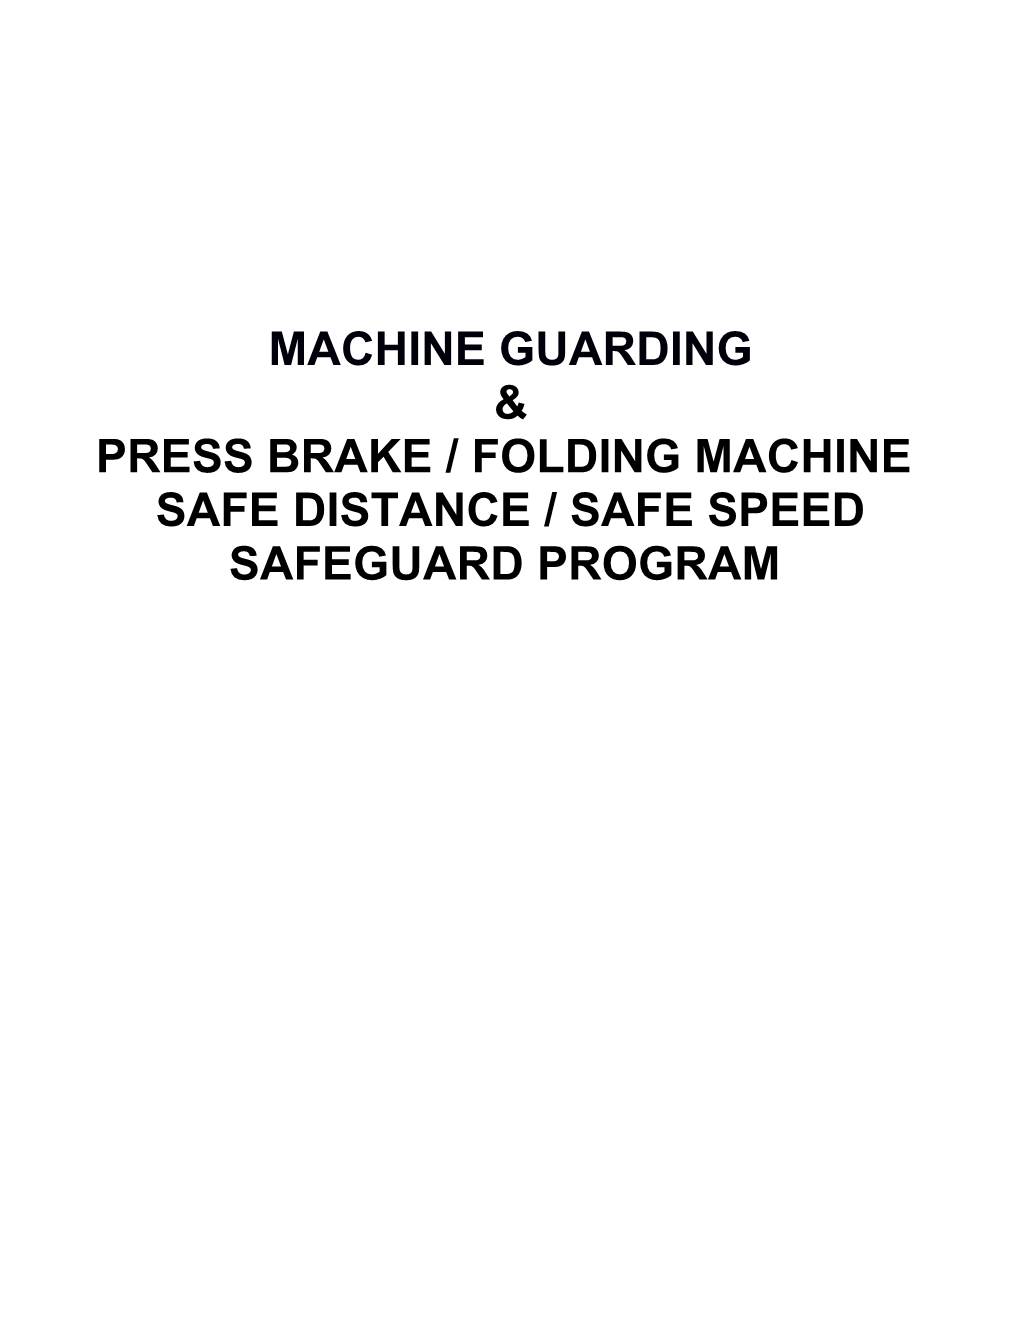 Press Brake / Foldingmachine - Safe Distance / Safe Speed